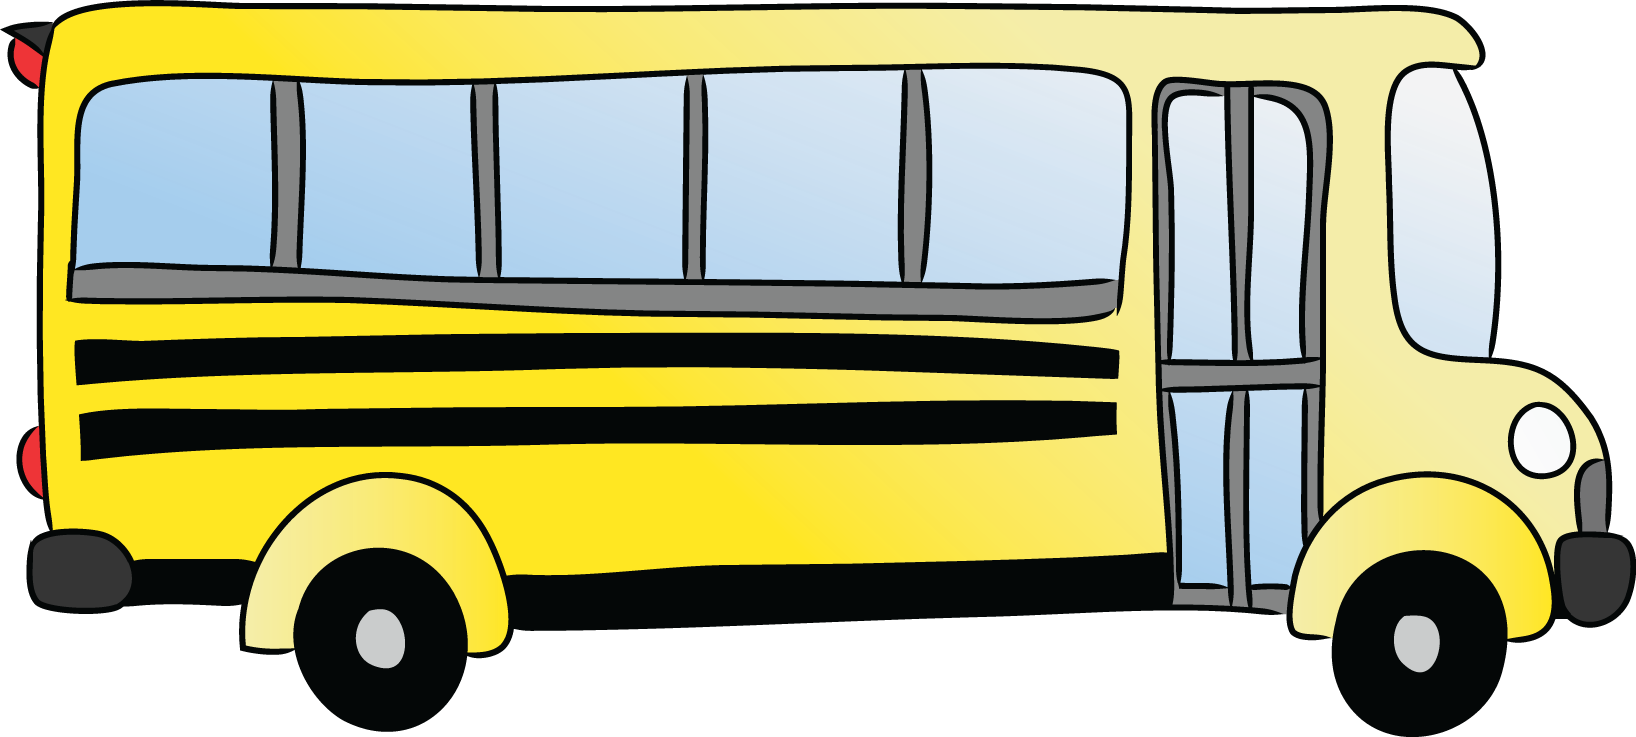 Free Cartoon School Bus Clip Art